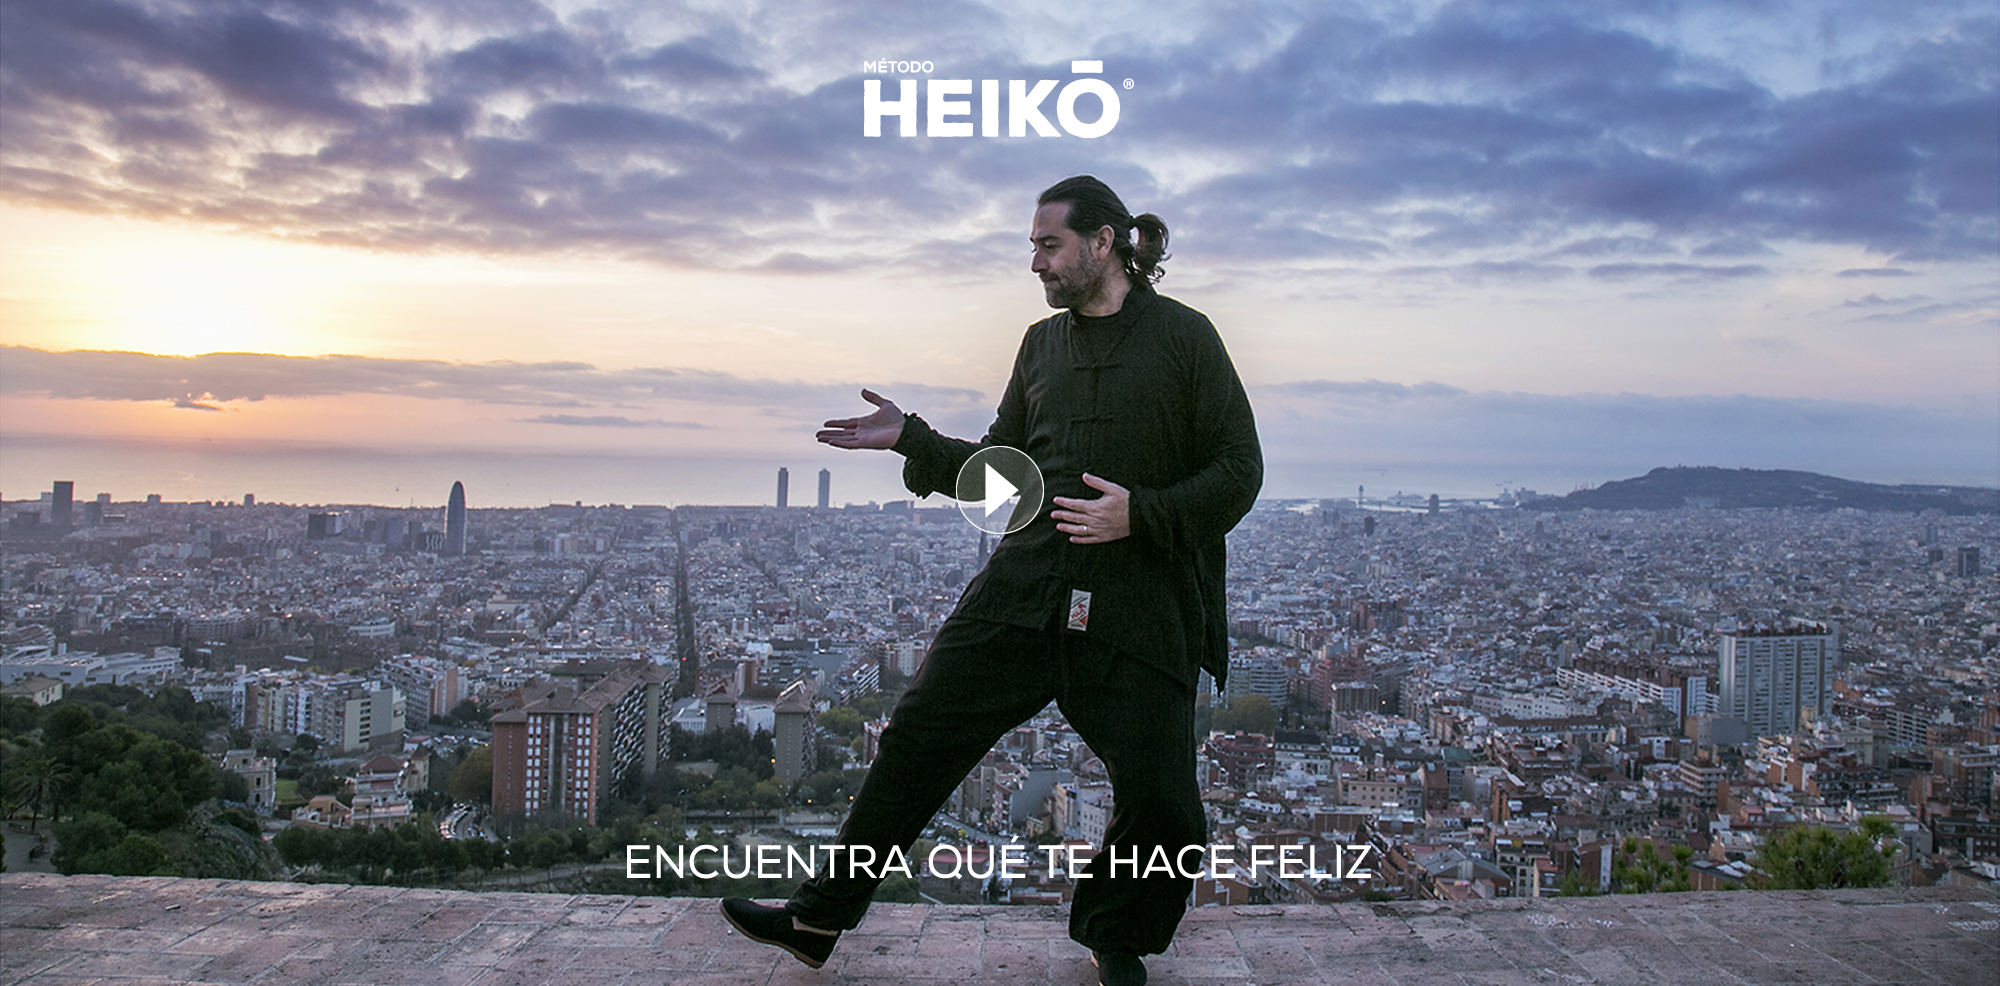 Metodo Heiko - Barcelona